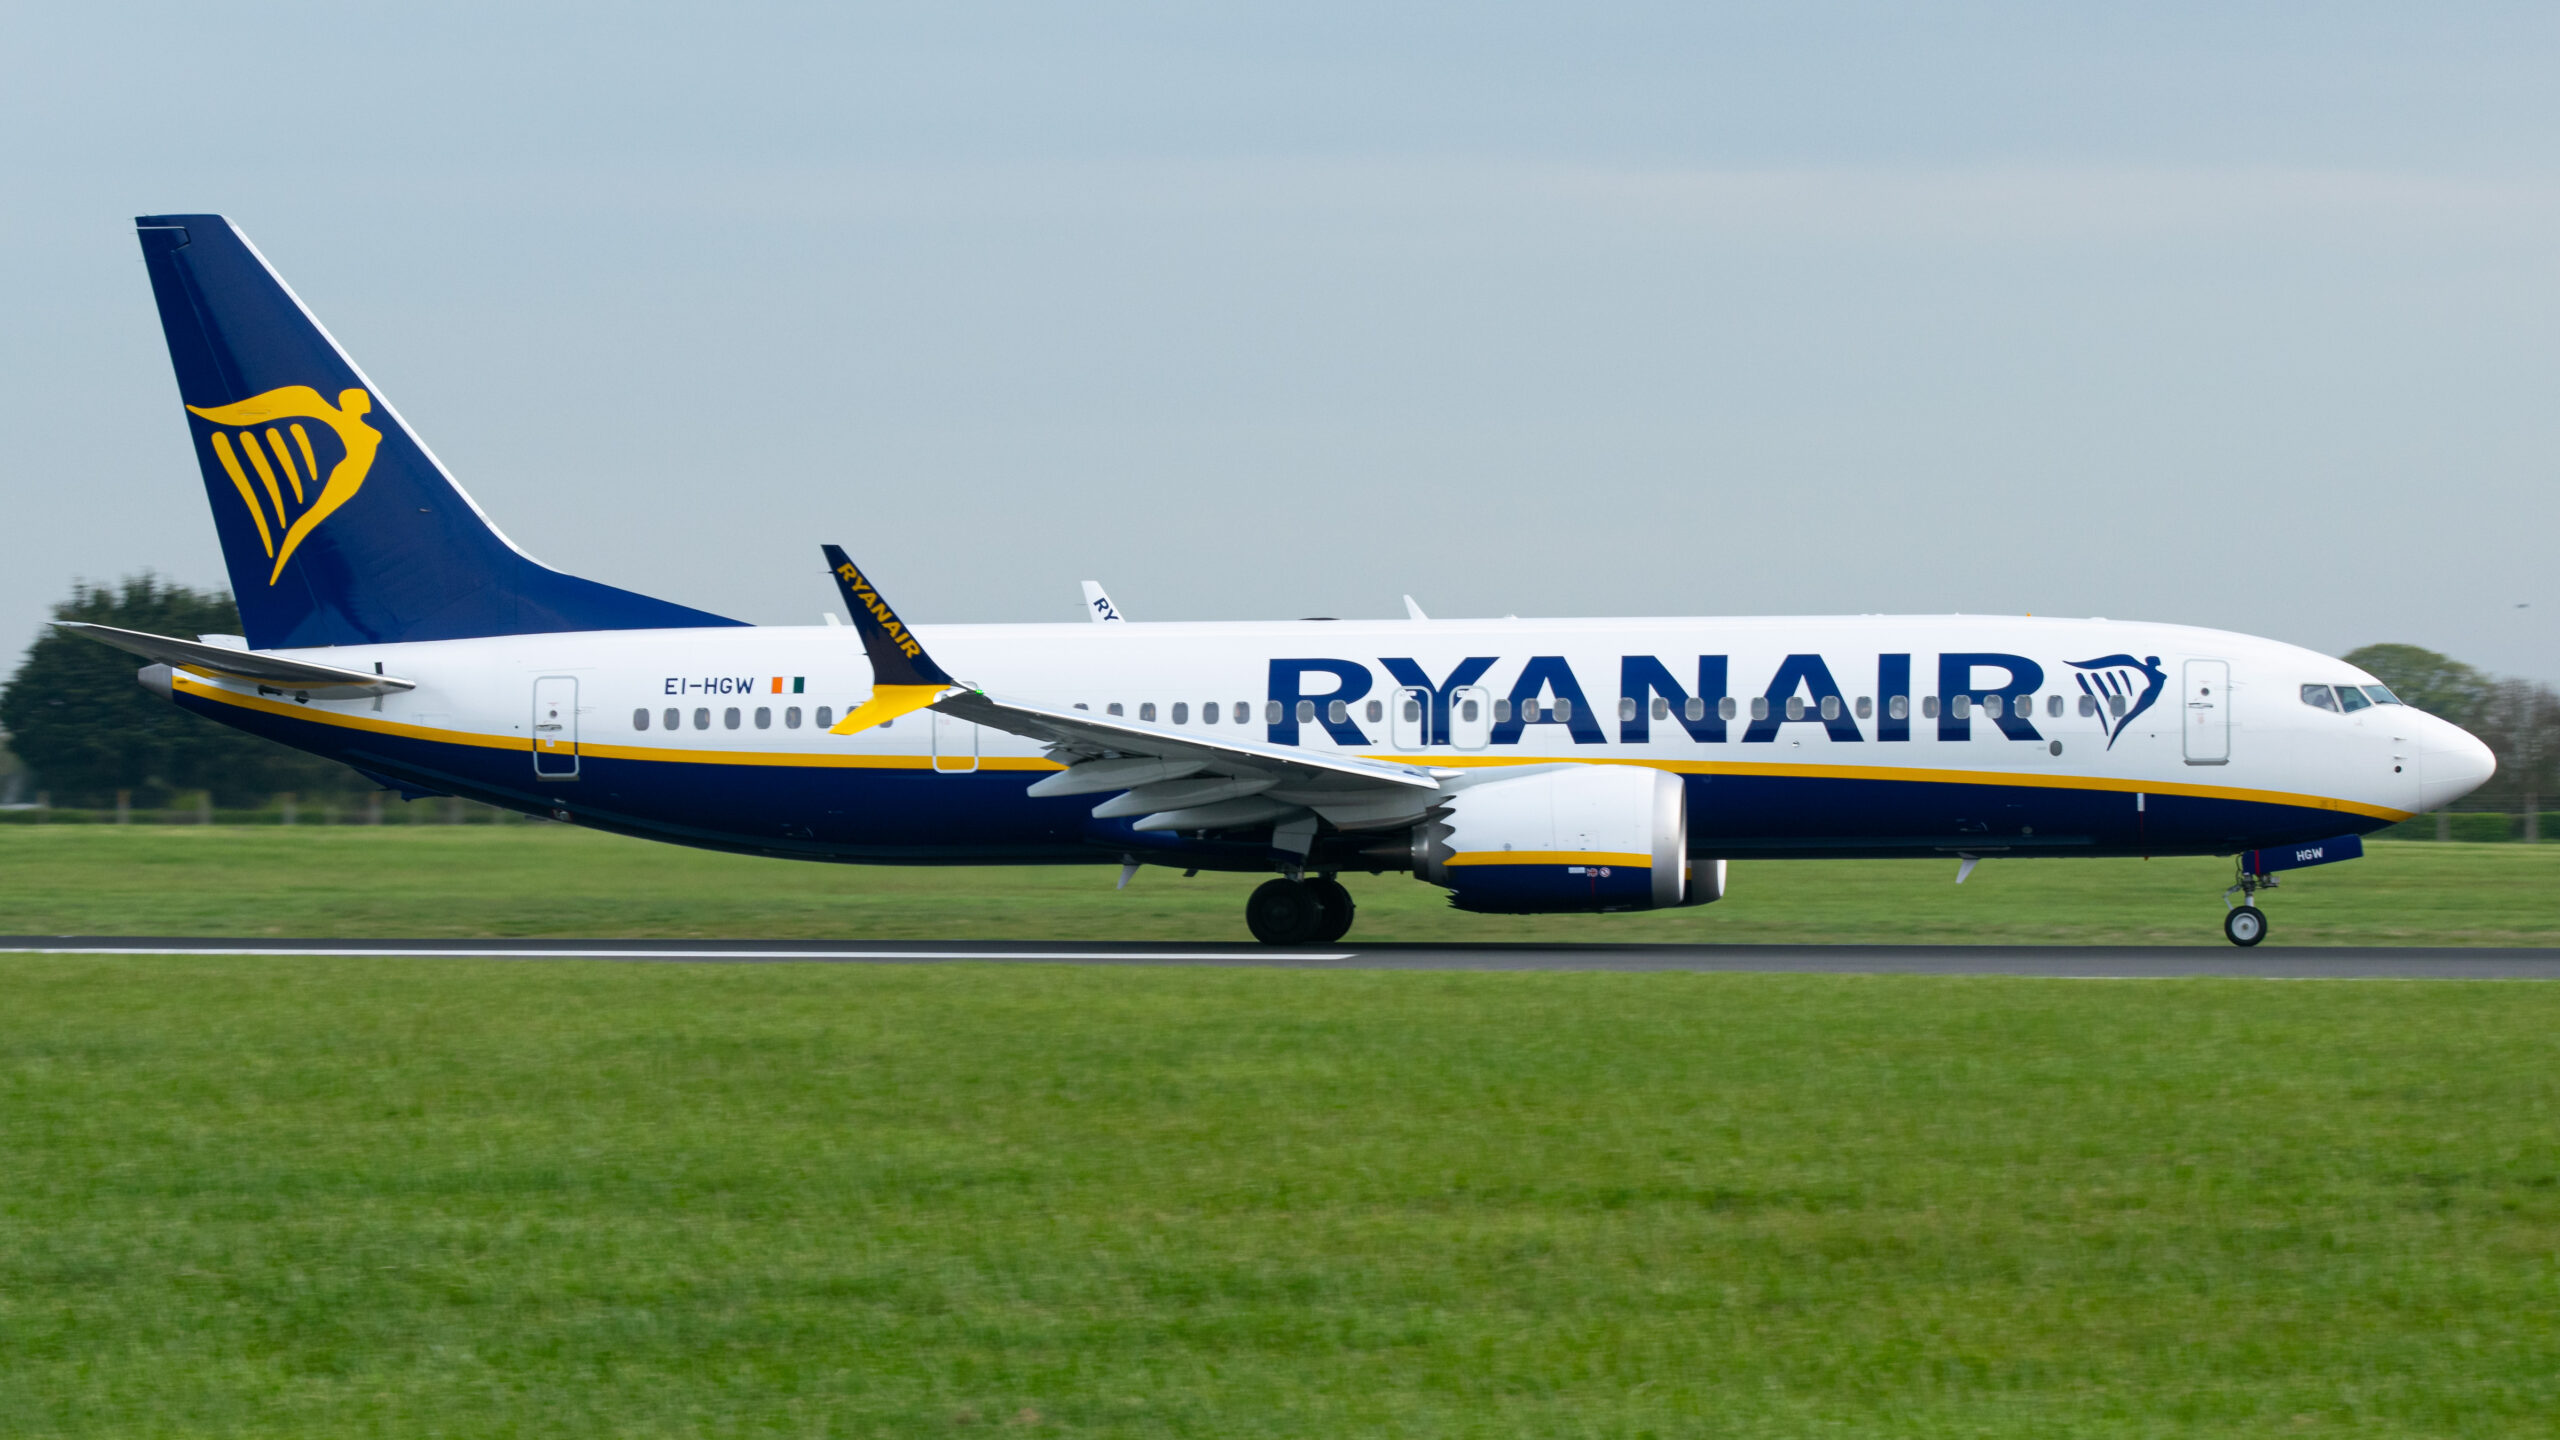 London Luton to Receive Three Ryanair 737 MAXs